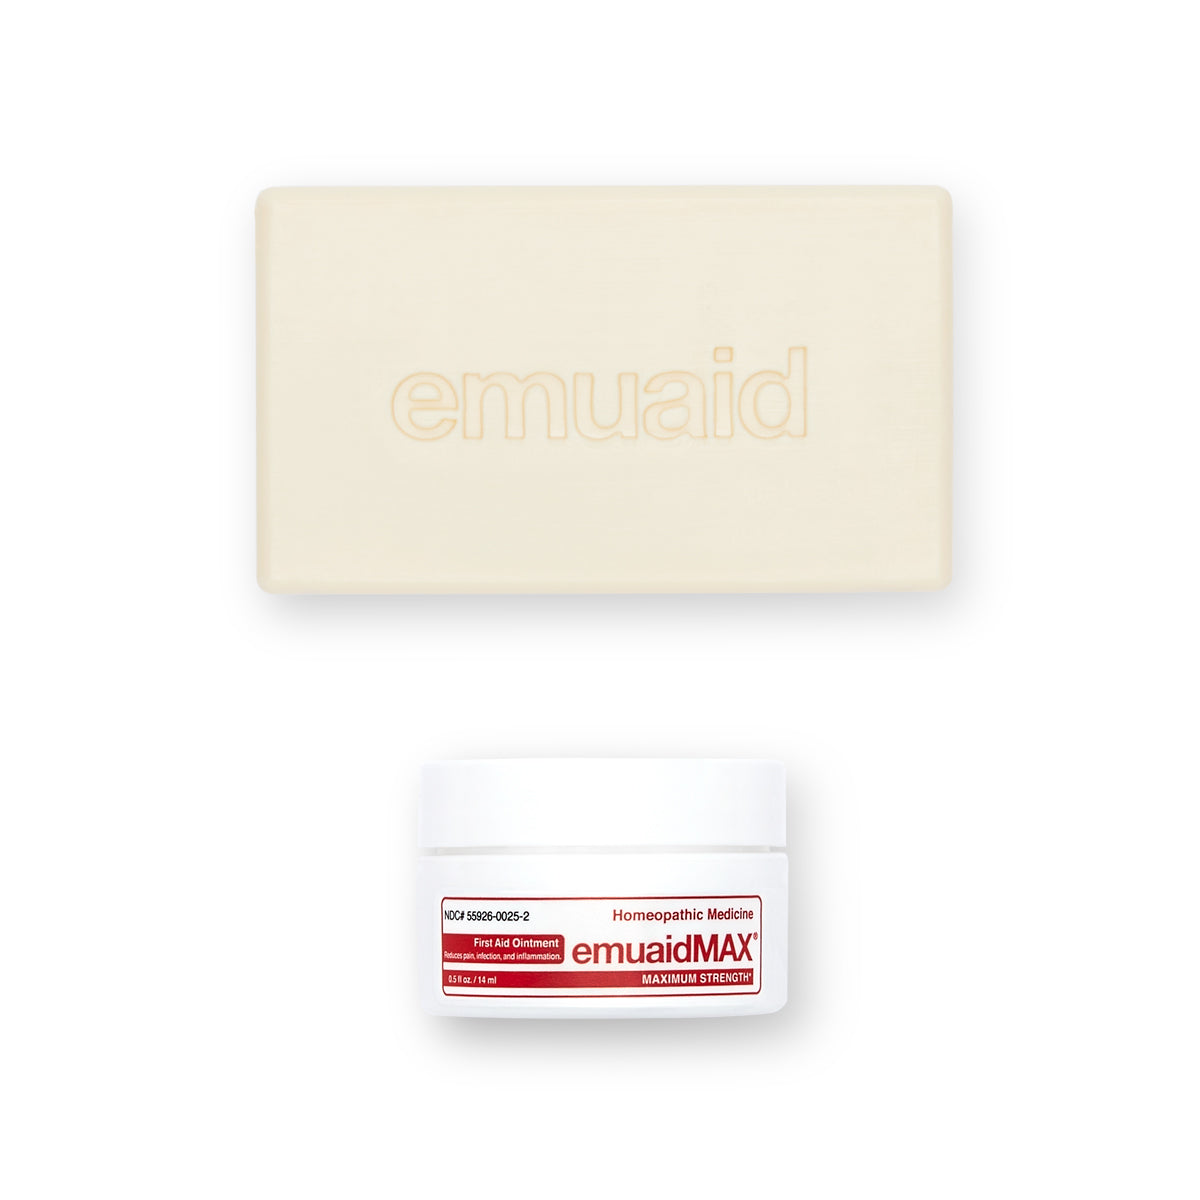 Esta es una foto del EMUAIDMAX® First Aid Ointment 2oz y del EMUAID® Therapeutic Moisture Bar.